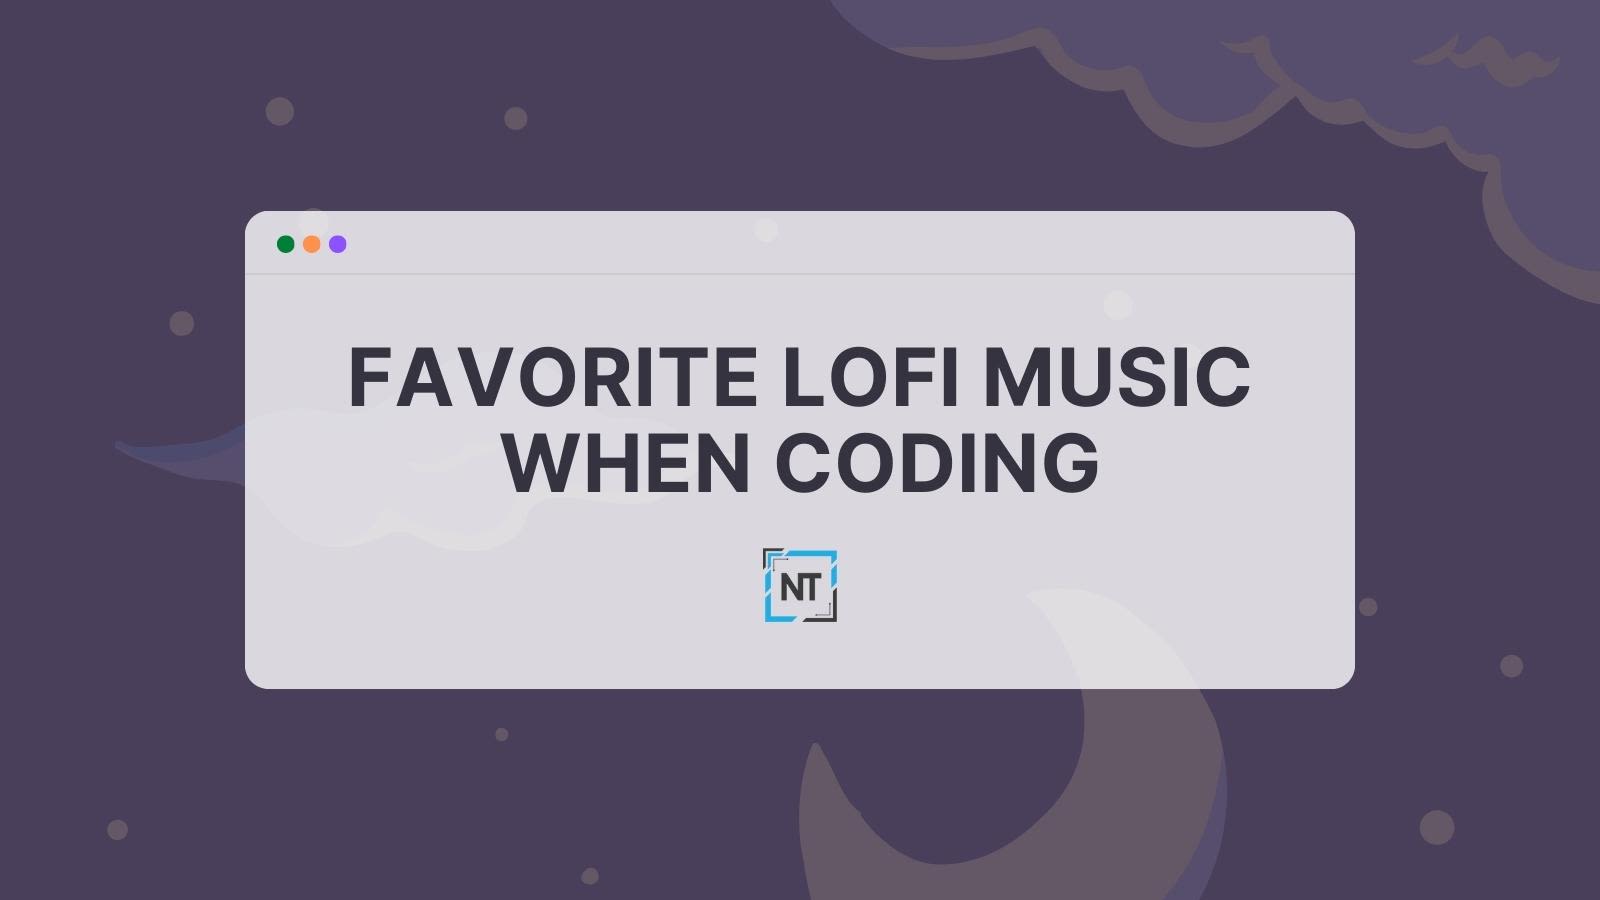 Cover Image for My favorite Lofi music when coding